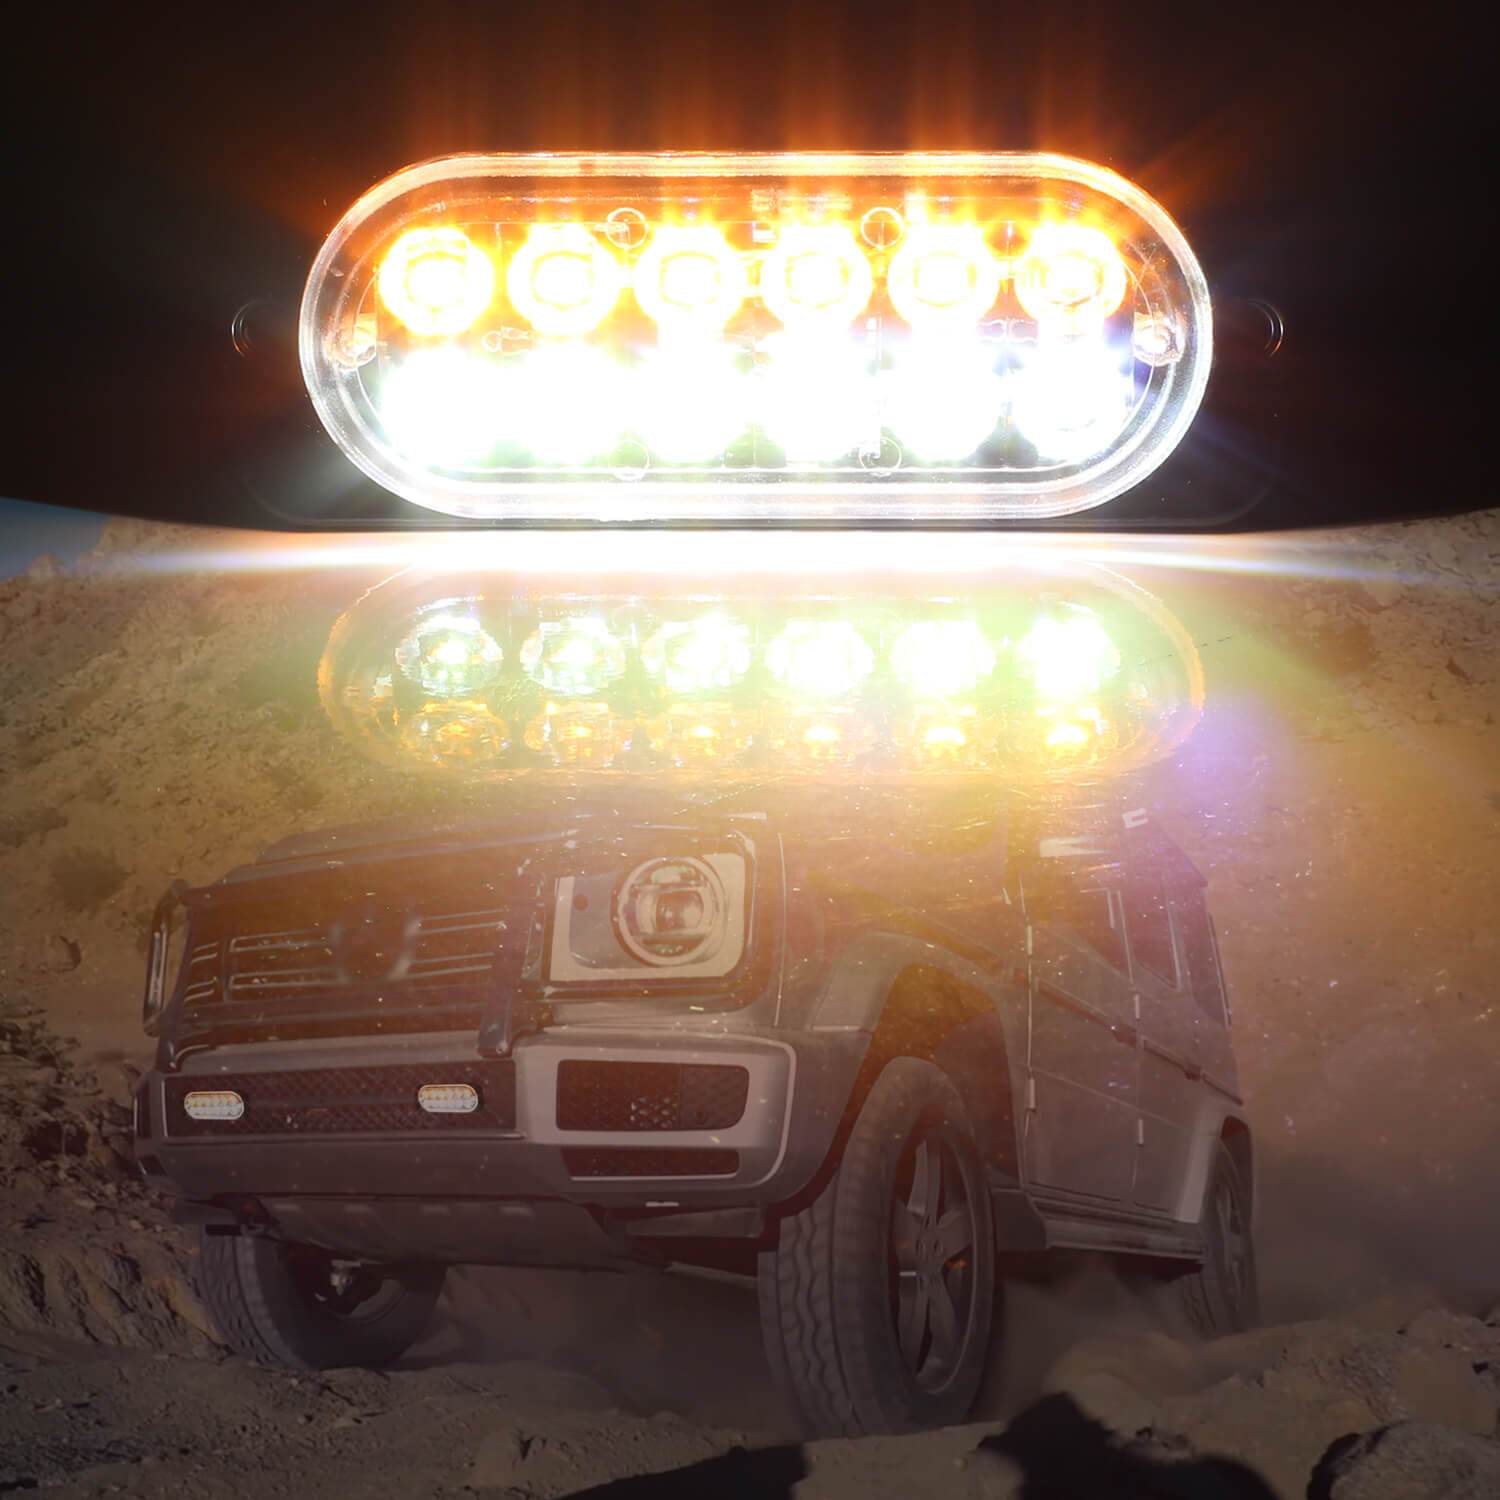 Emergency LED Strobe Lights Bar for Offroad Car Truck Warning Hazard Flash Grille and Surface Mount Light - Amber / White 12-LED